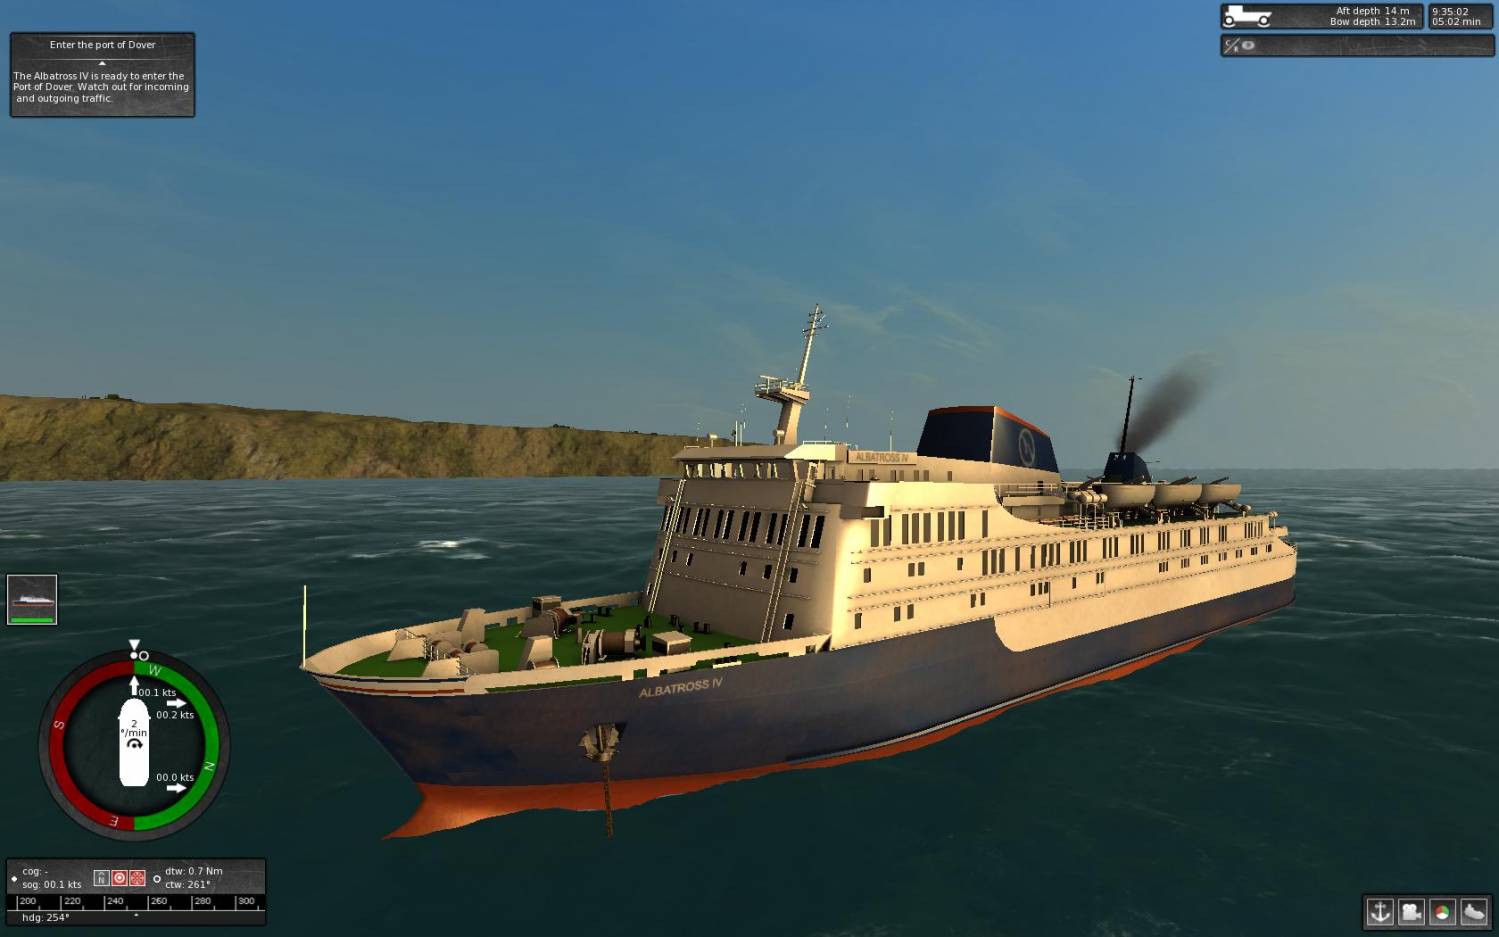 ship simulator extremes demo indir